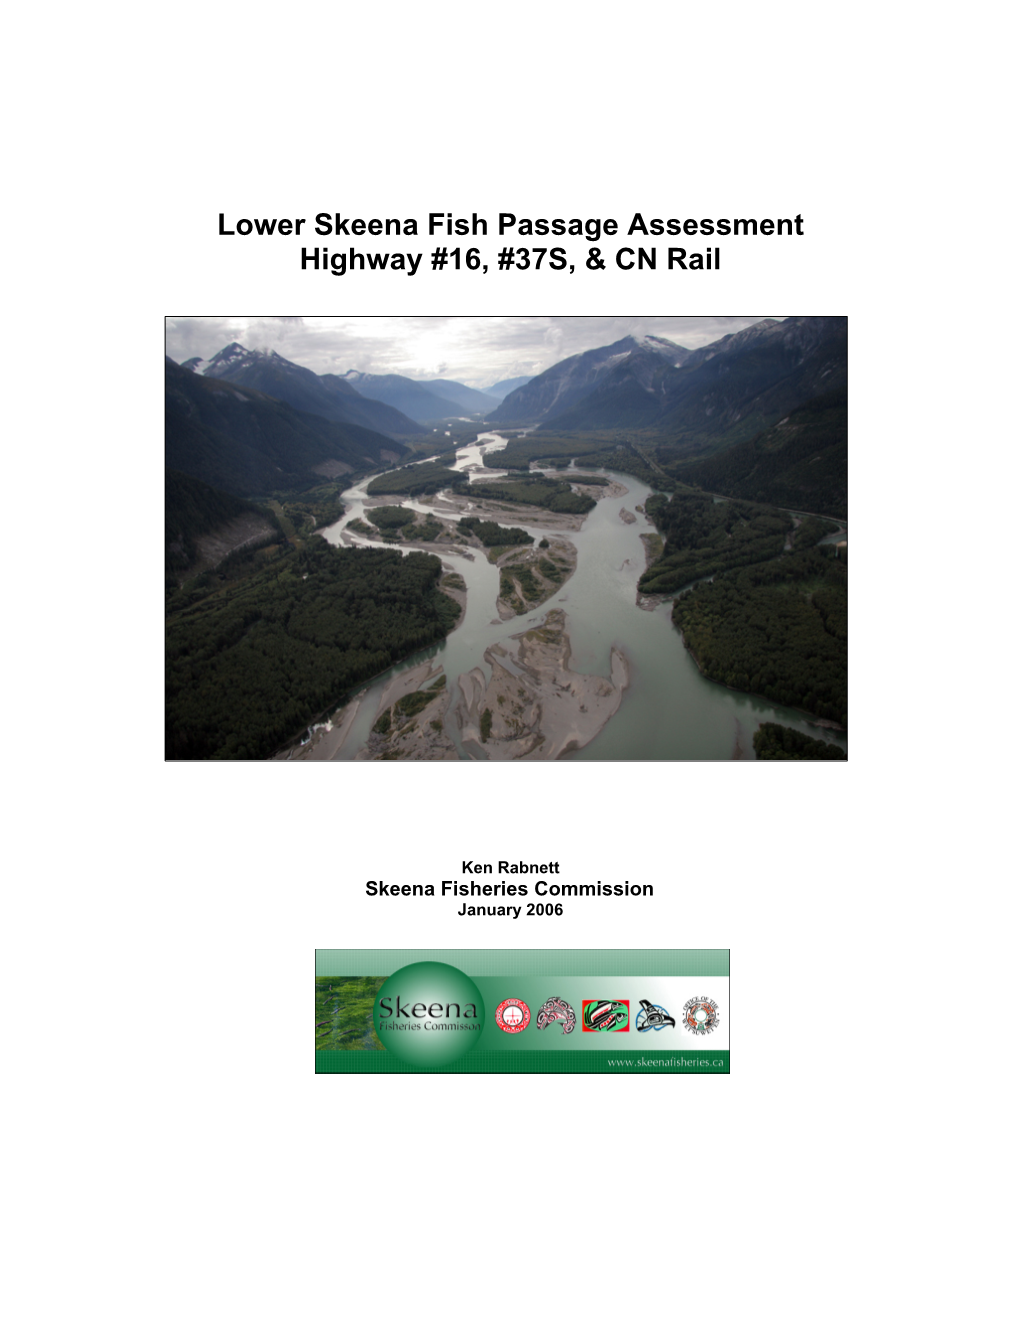 Lower Skeena Fish Passage Assessment Highway #16, #37S, & CN Rail